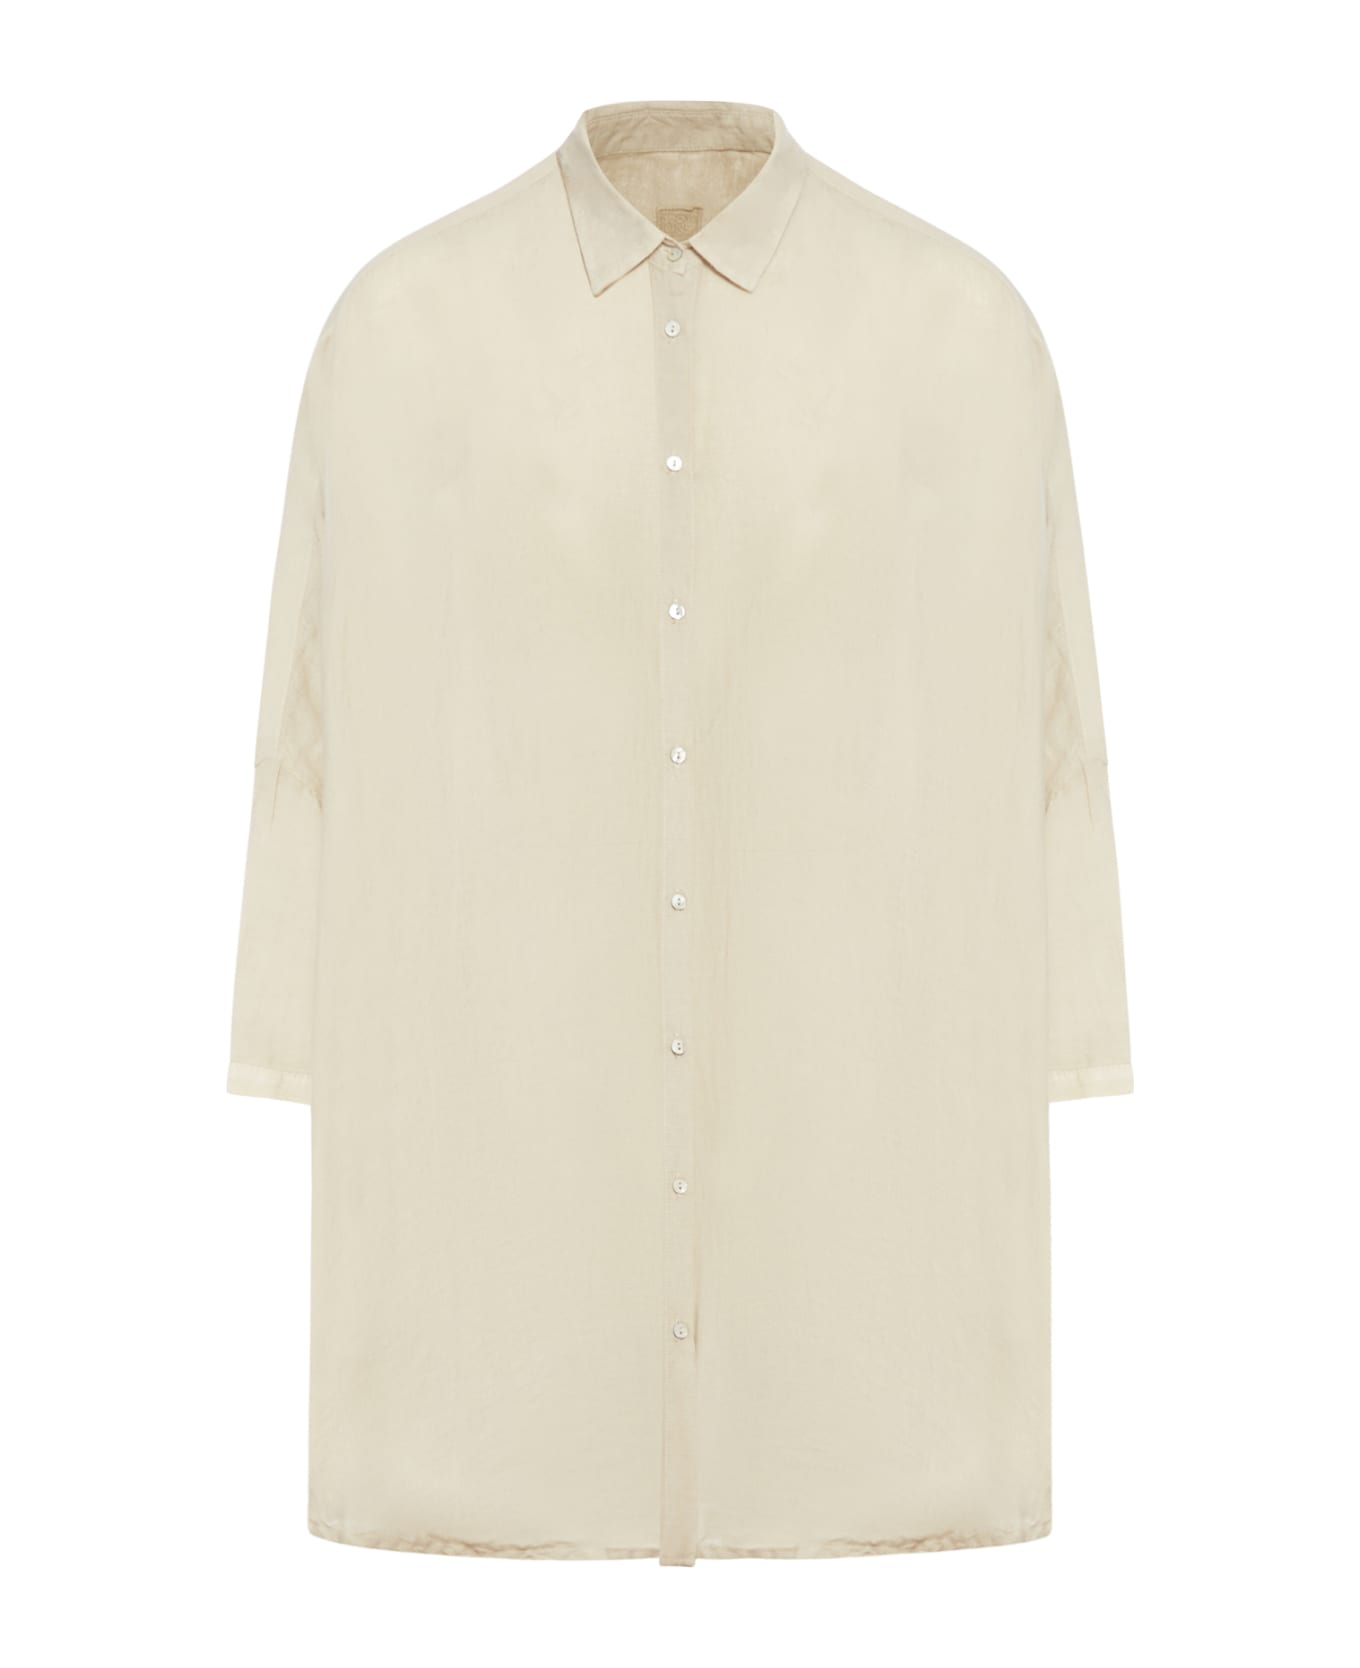 120% Lino Short Sleeve Woman Shirt - Nut シャツ